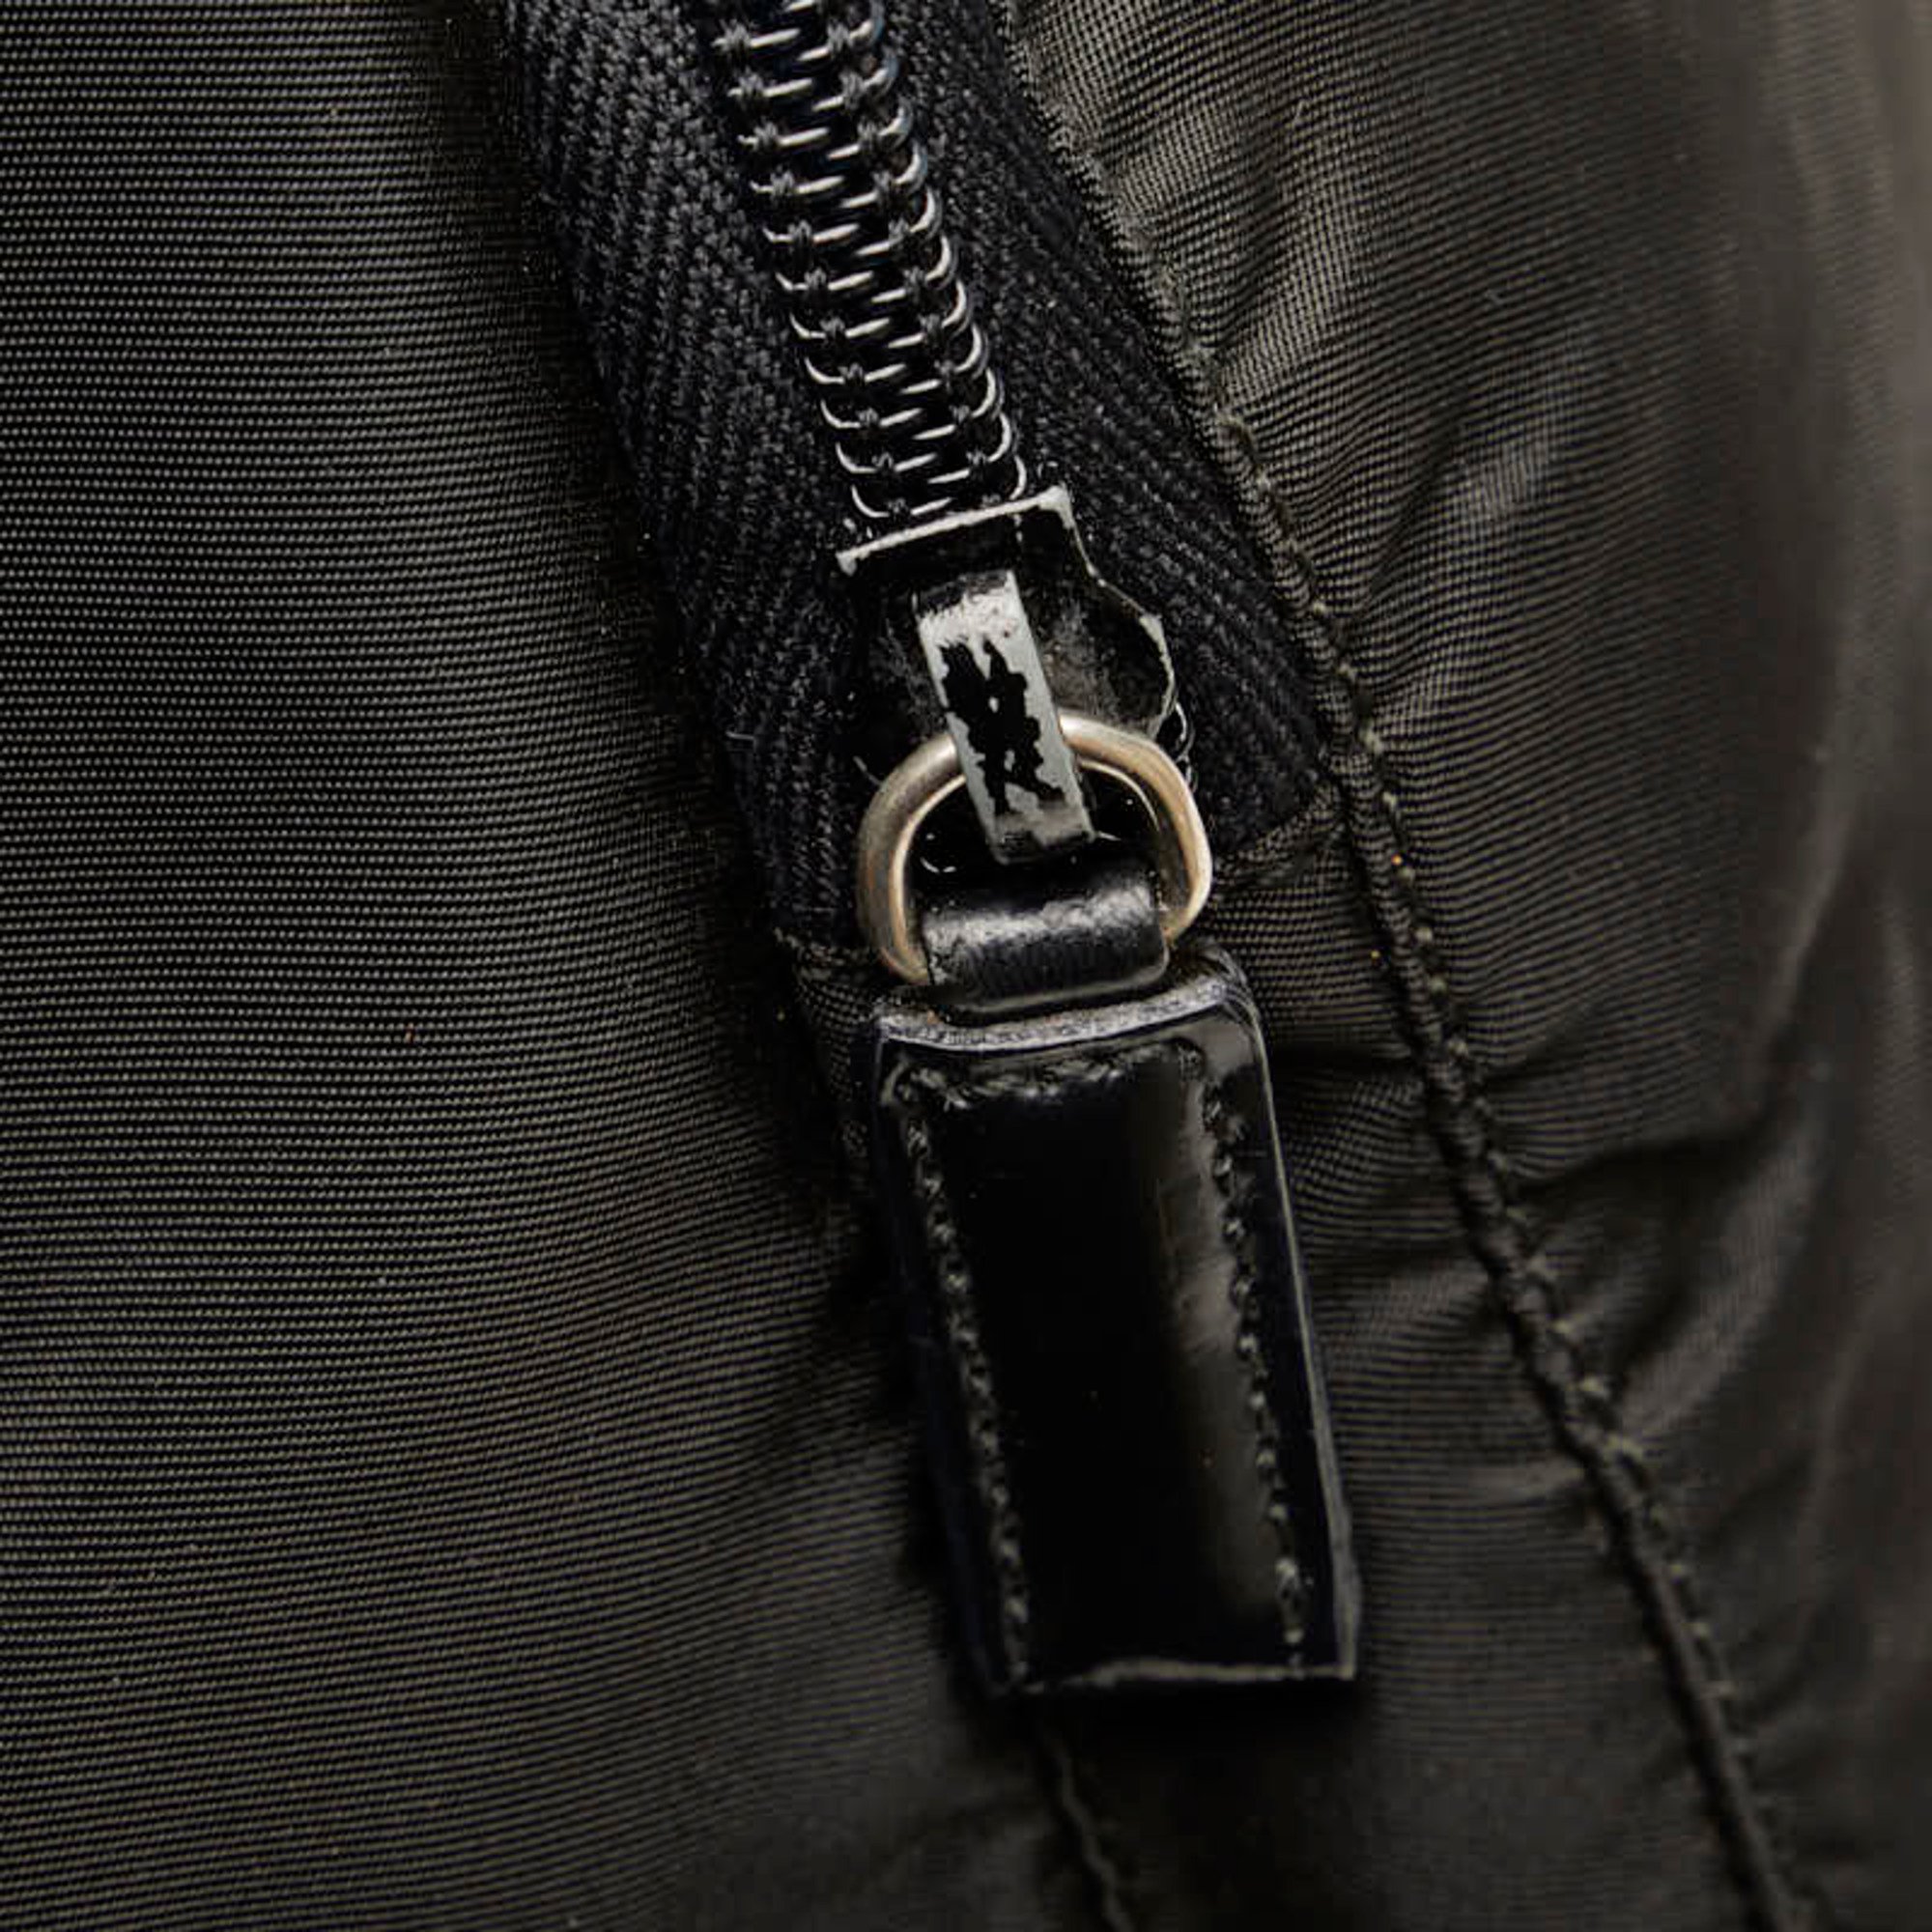 Prada Triangle Plate Tessuto Backpack Black Nylon Leather Women's PRADA